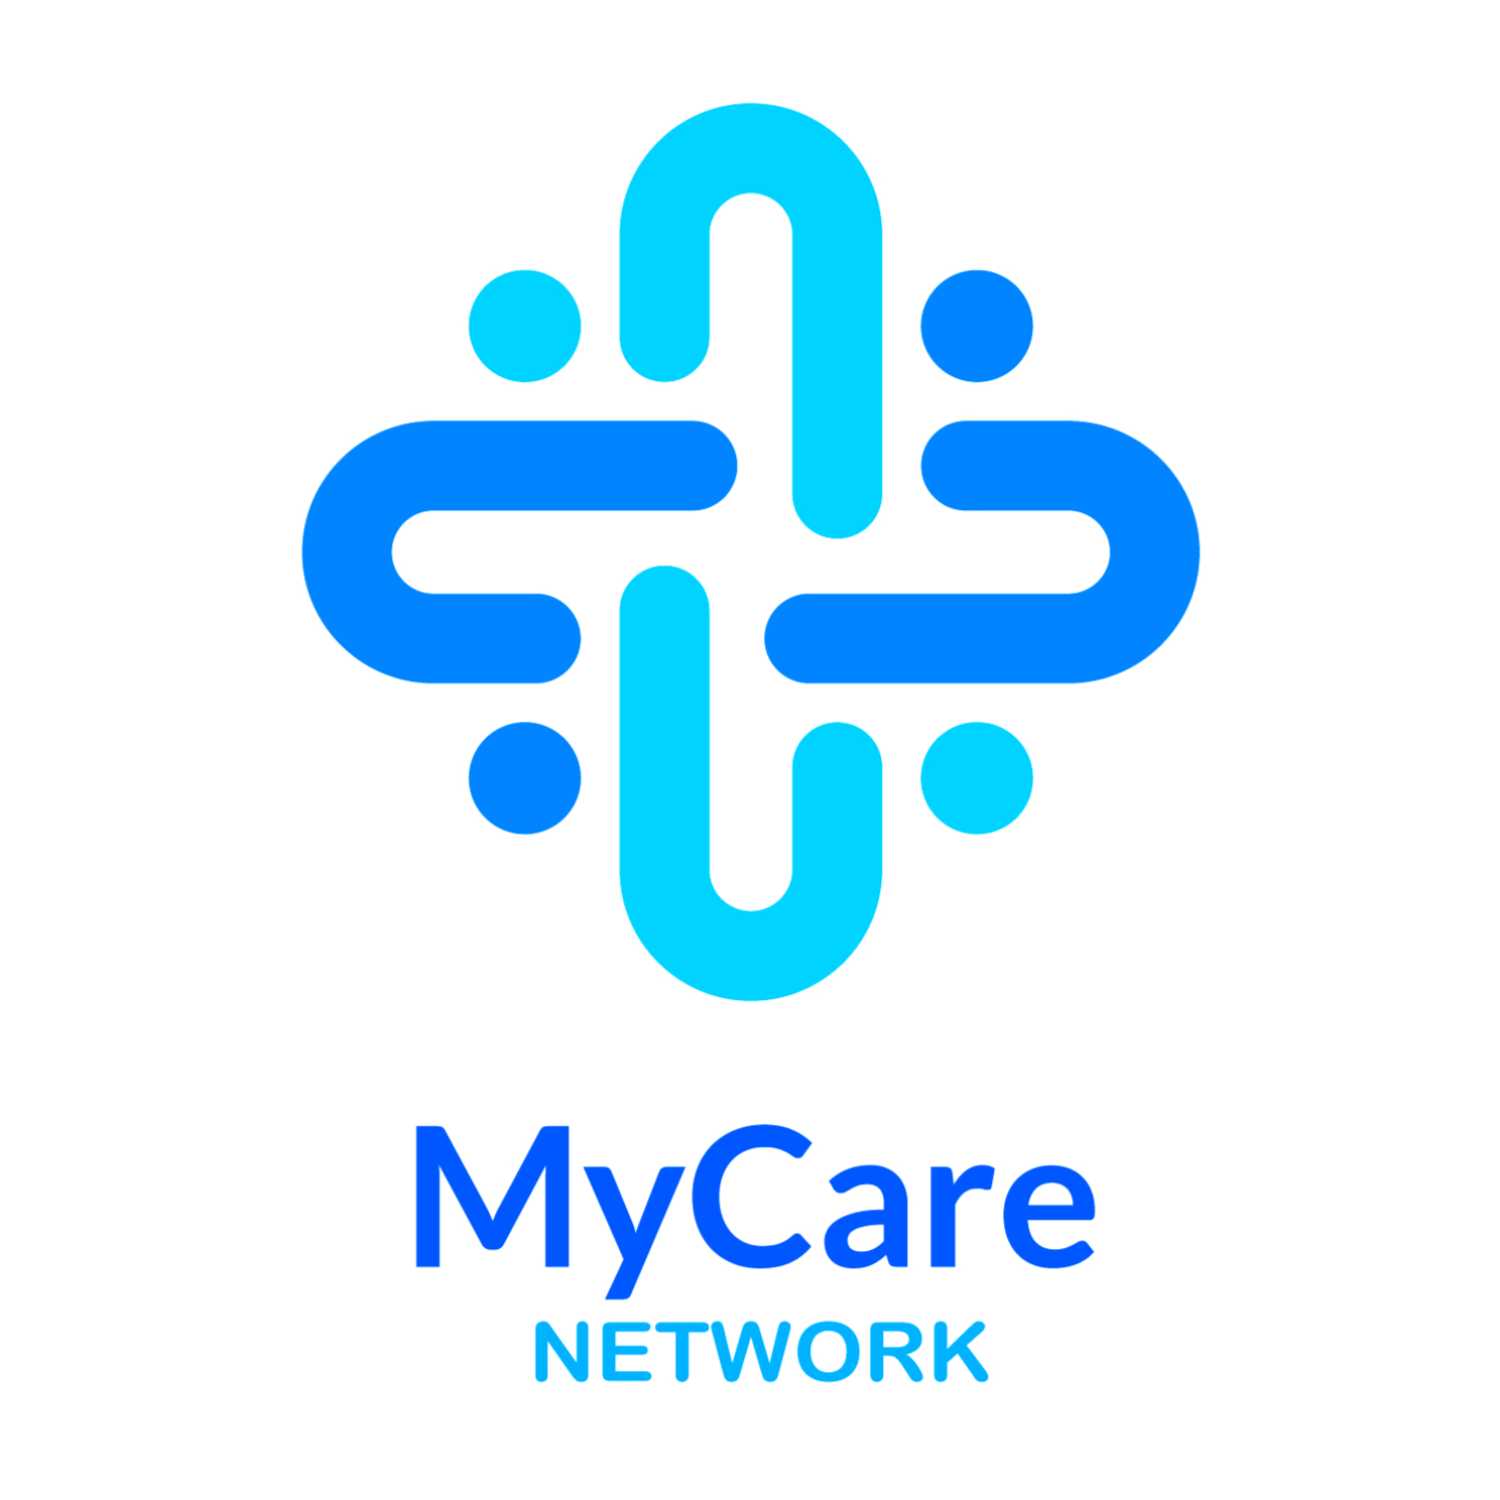 MyCare Network